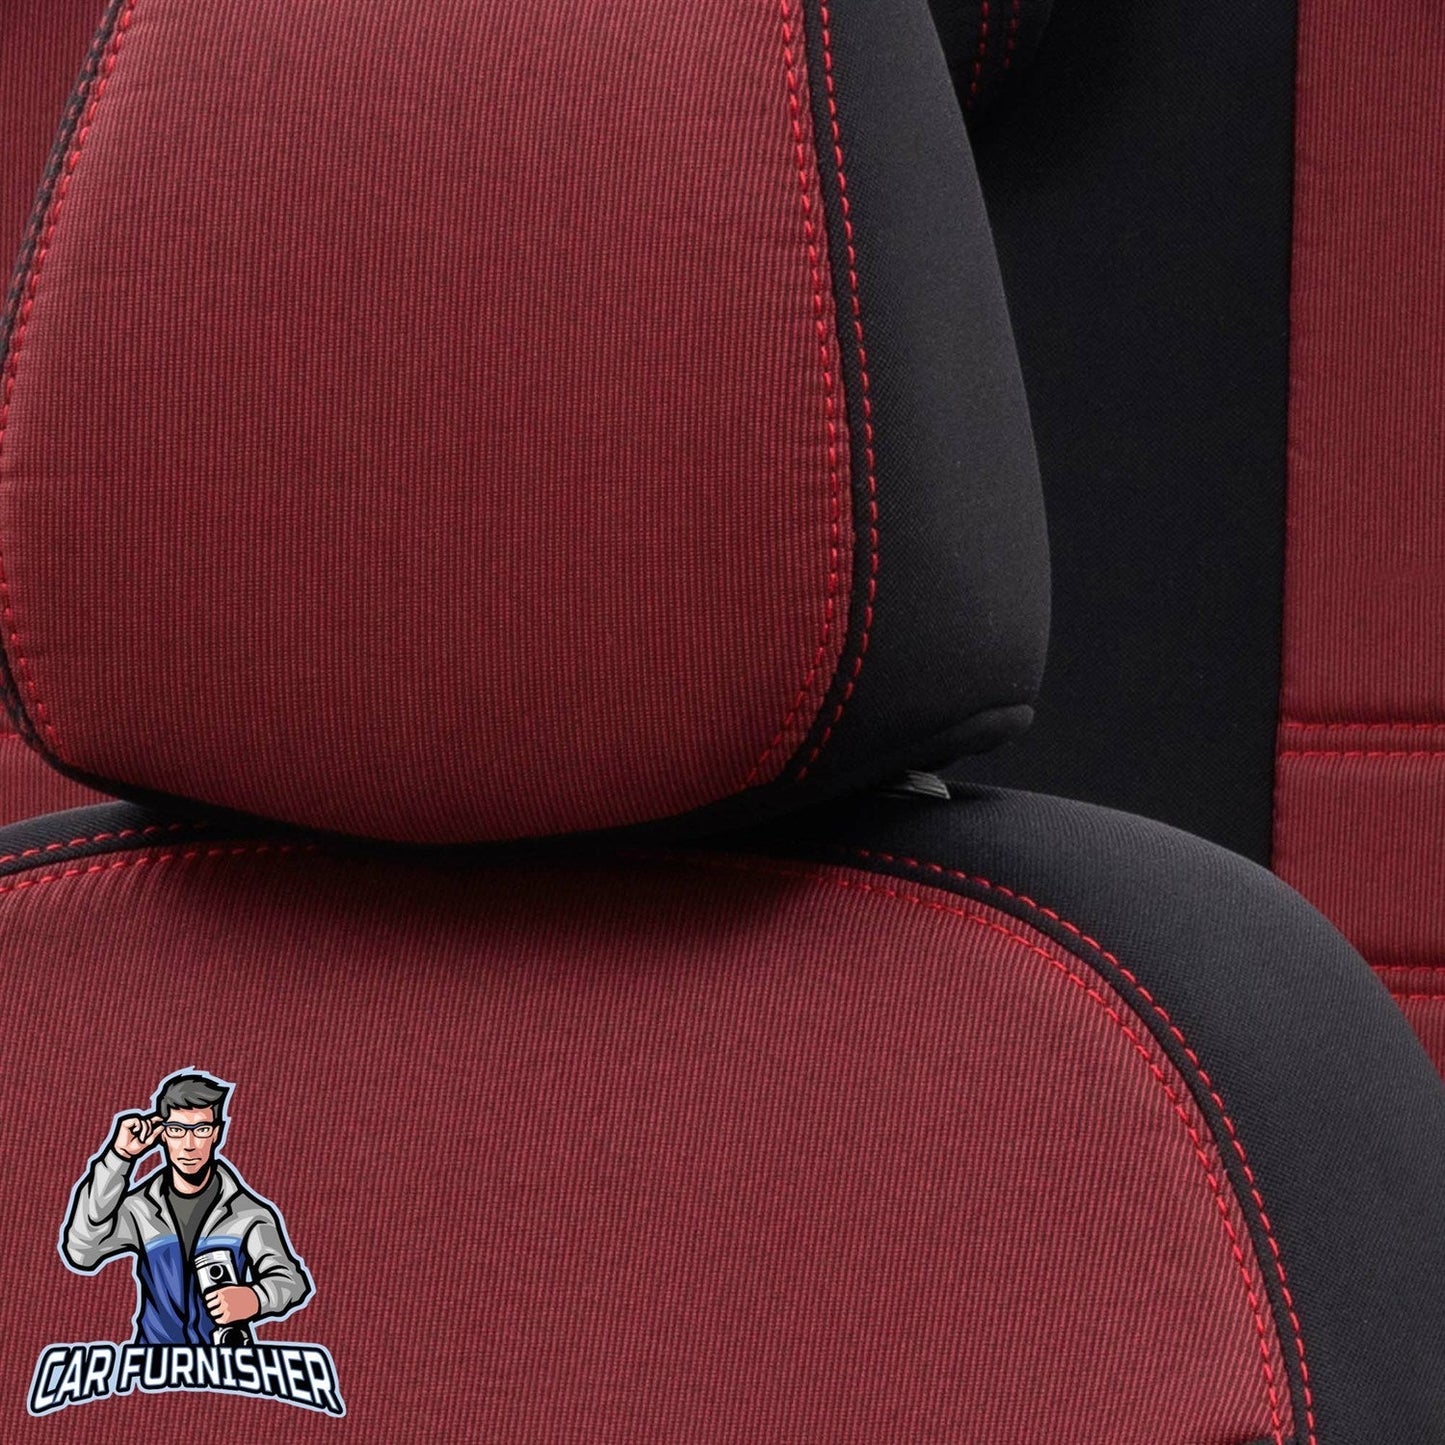 Fiat Bravo Seat Covers Original Jacquard Design Red Jacquard Fabric